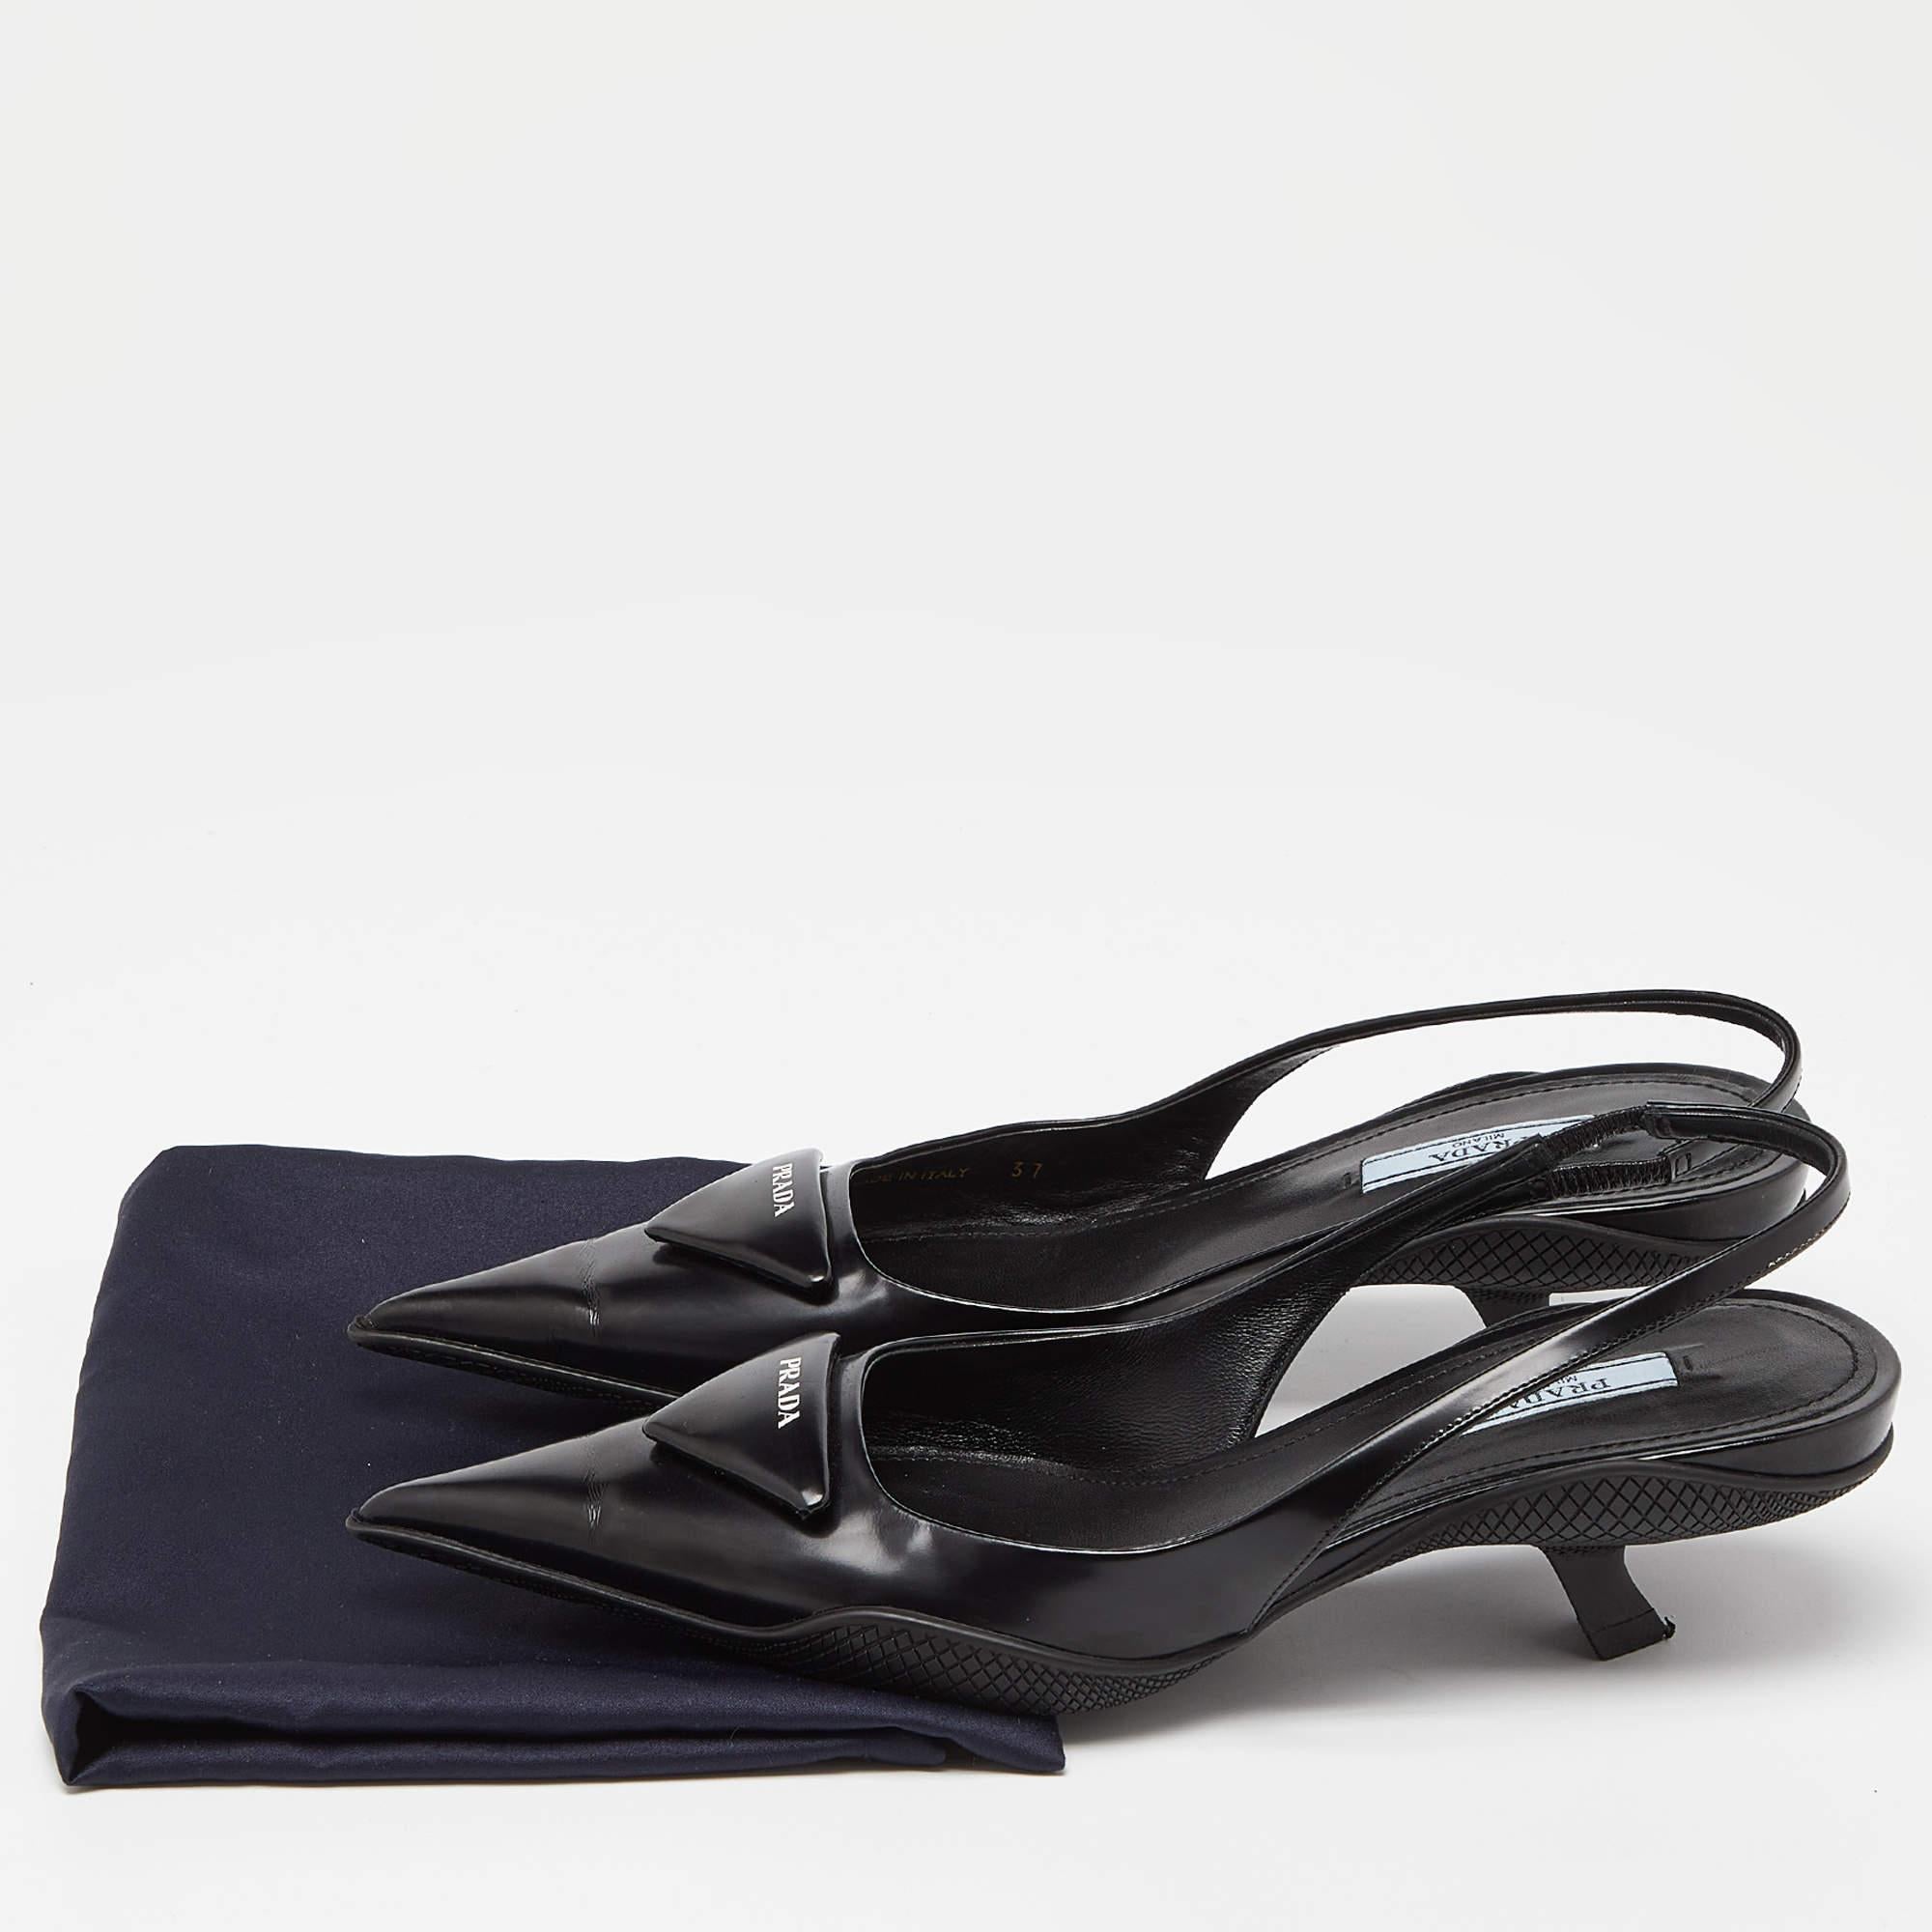 Prada Black Leather Triangle Logo Kitten Heel Slingback Sandals Size 37 5